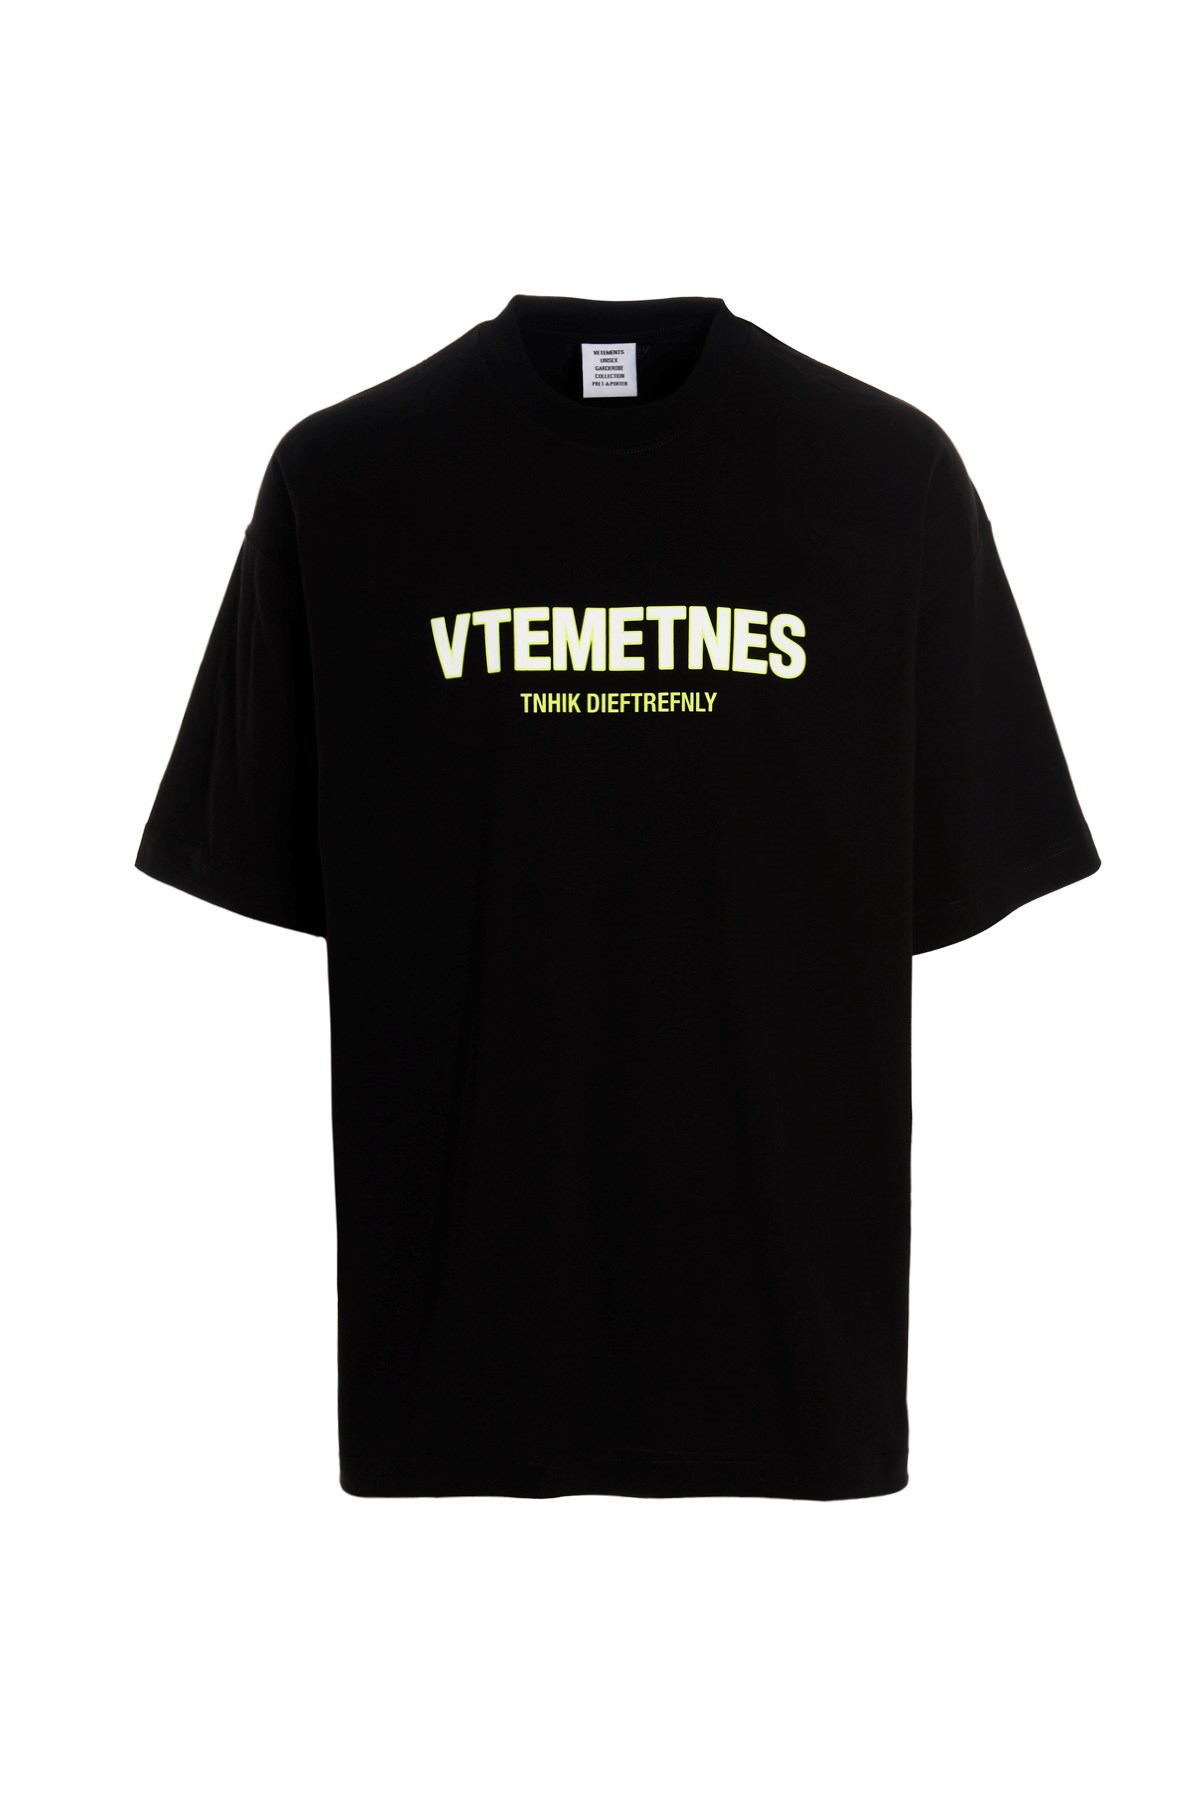 VETEMENTS 'Vtemetnes’ T-Shirt